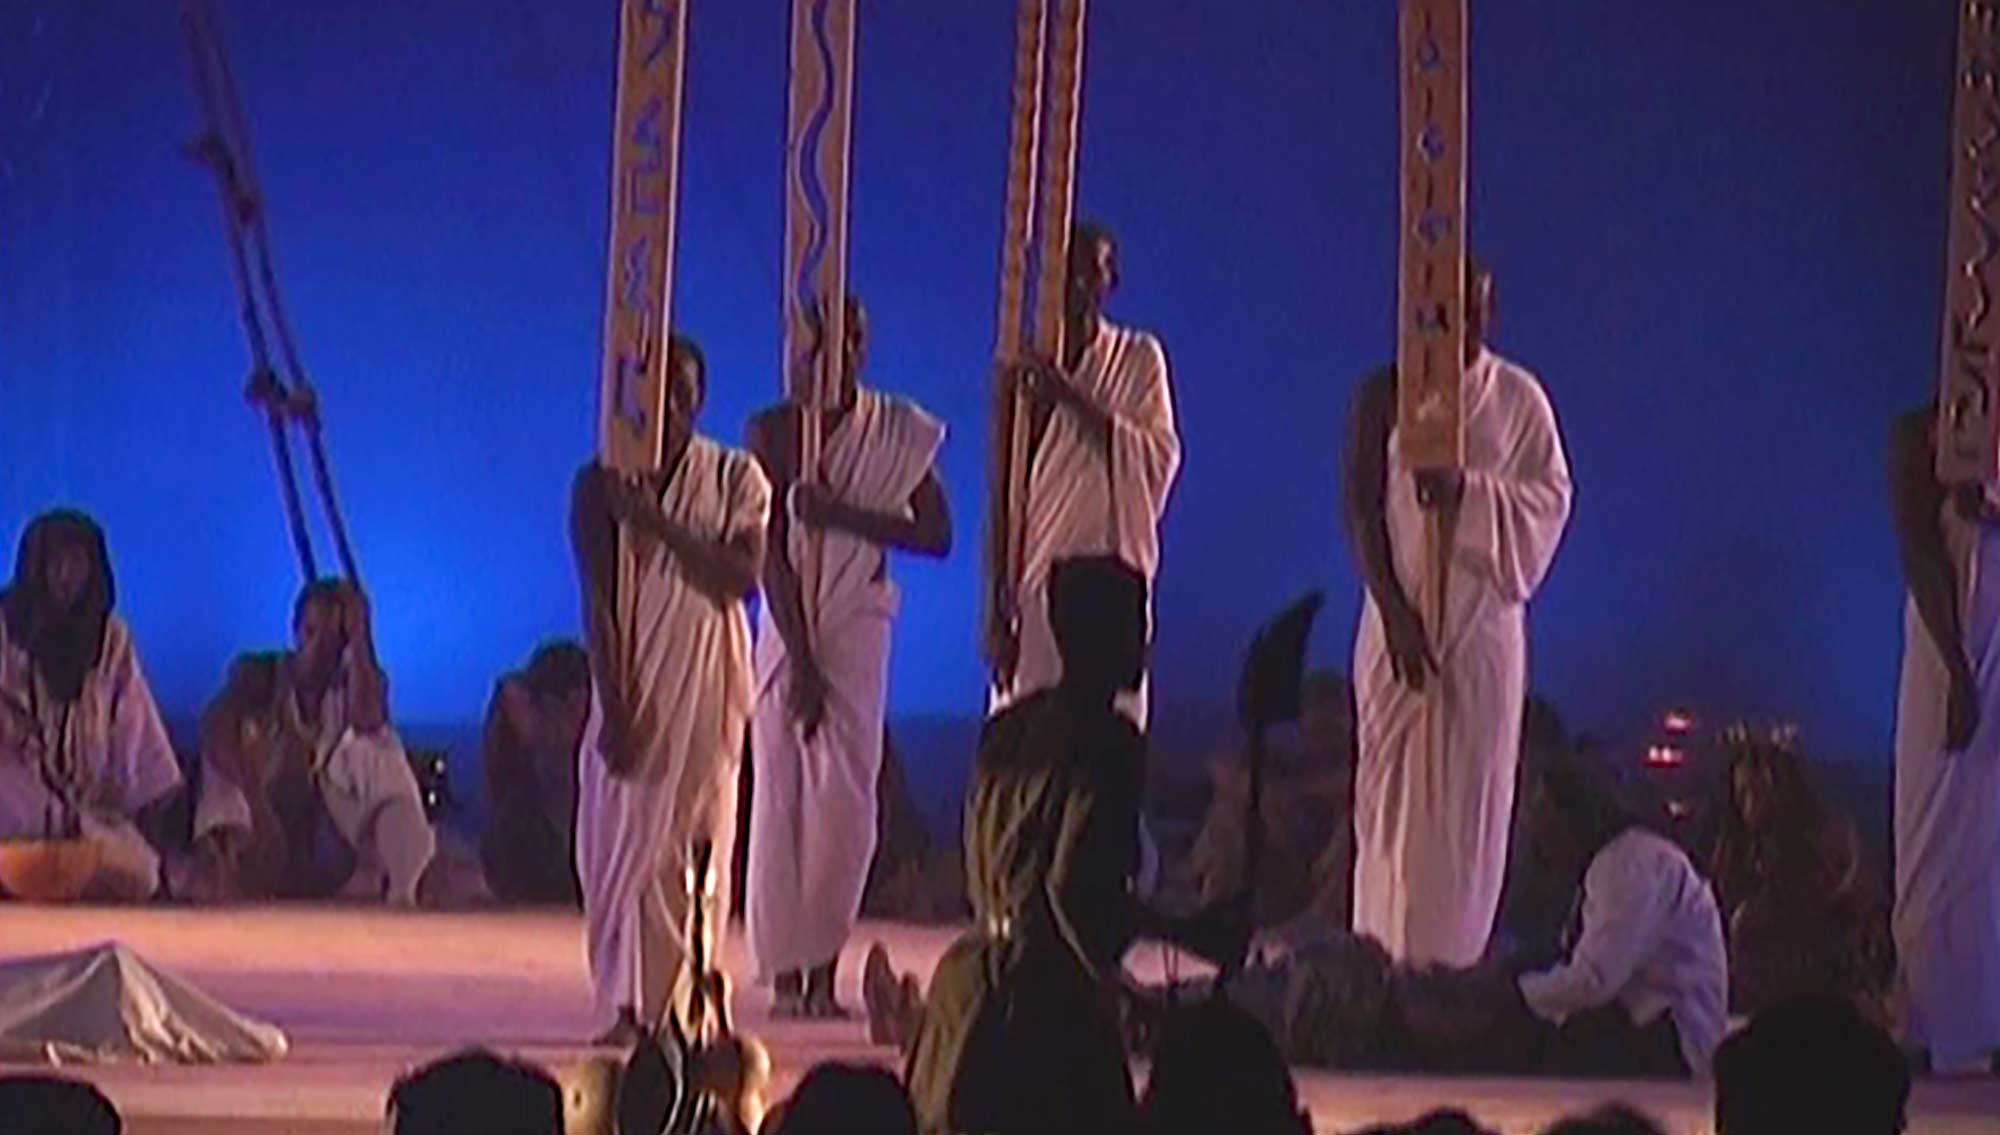 Manthia Diawara, An Opera of the World, 2017, a scene from ‘Bintou Wéré, a Sahel Opera’, Bamako. © Manthia Diawara. Courtesy of the artist and Maumaus/Lumiar Cité.